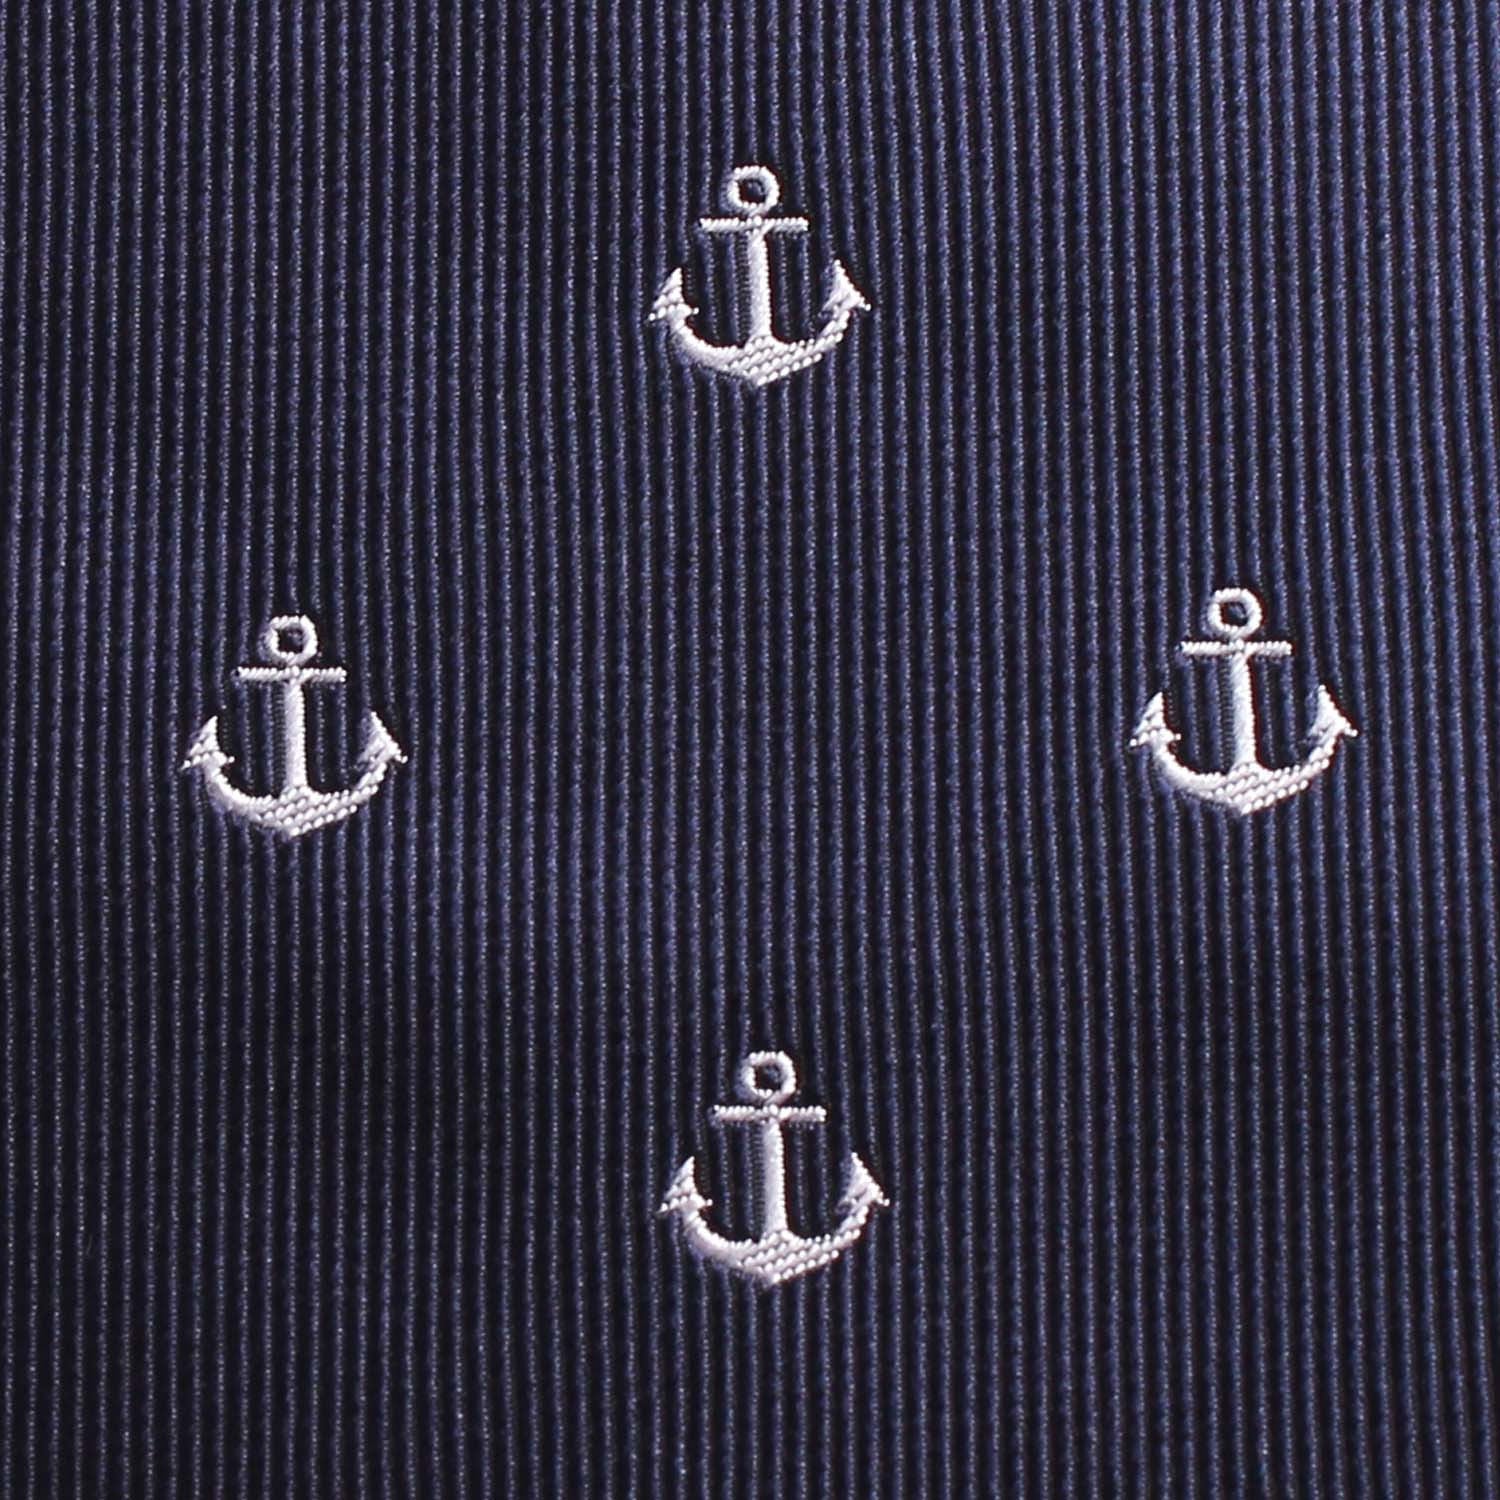 The OTAA Navy Blue Anchor Fabric Pocket Square M044The OTAA Navy Blue Anchor Fabric Pocket Square M044